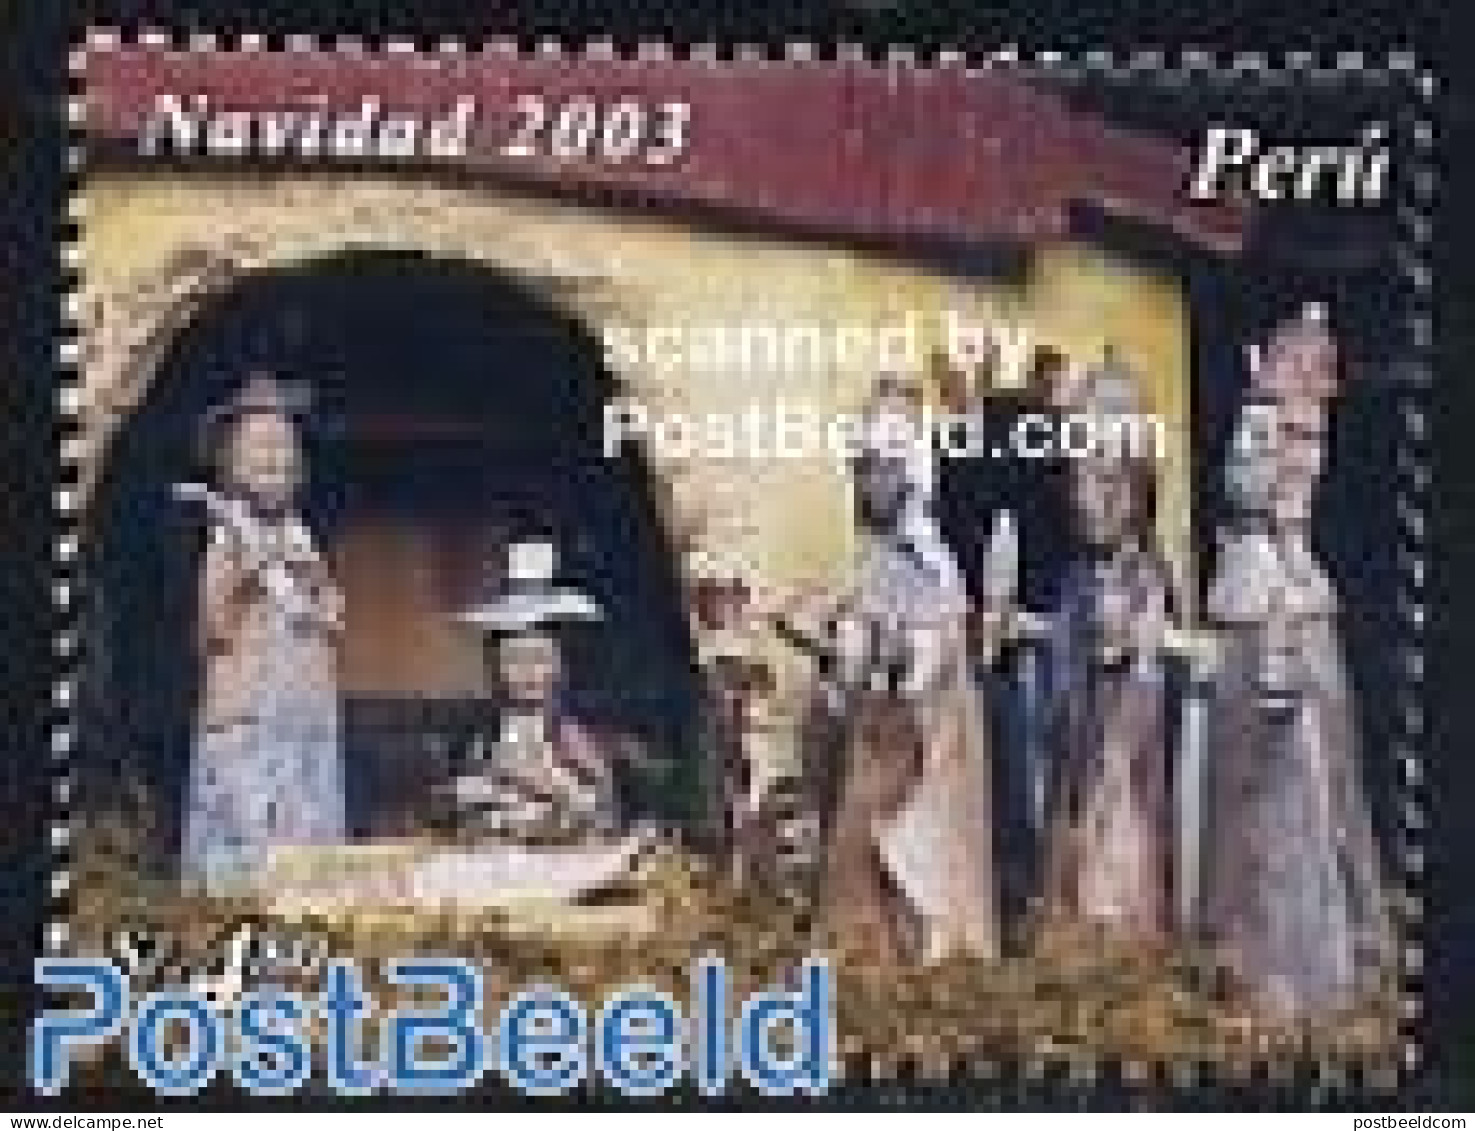 Peru 2003 Christmas 1v, Mint NH, Religion - Christmas - Christmas